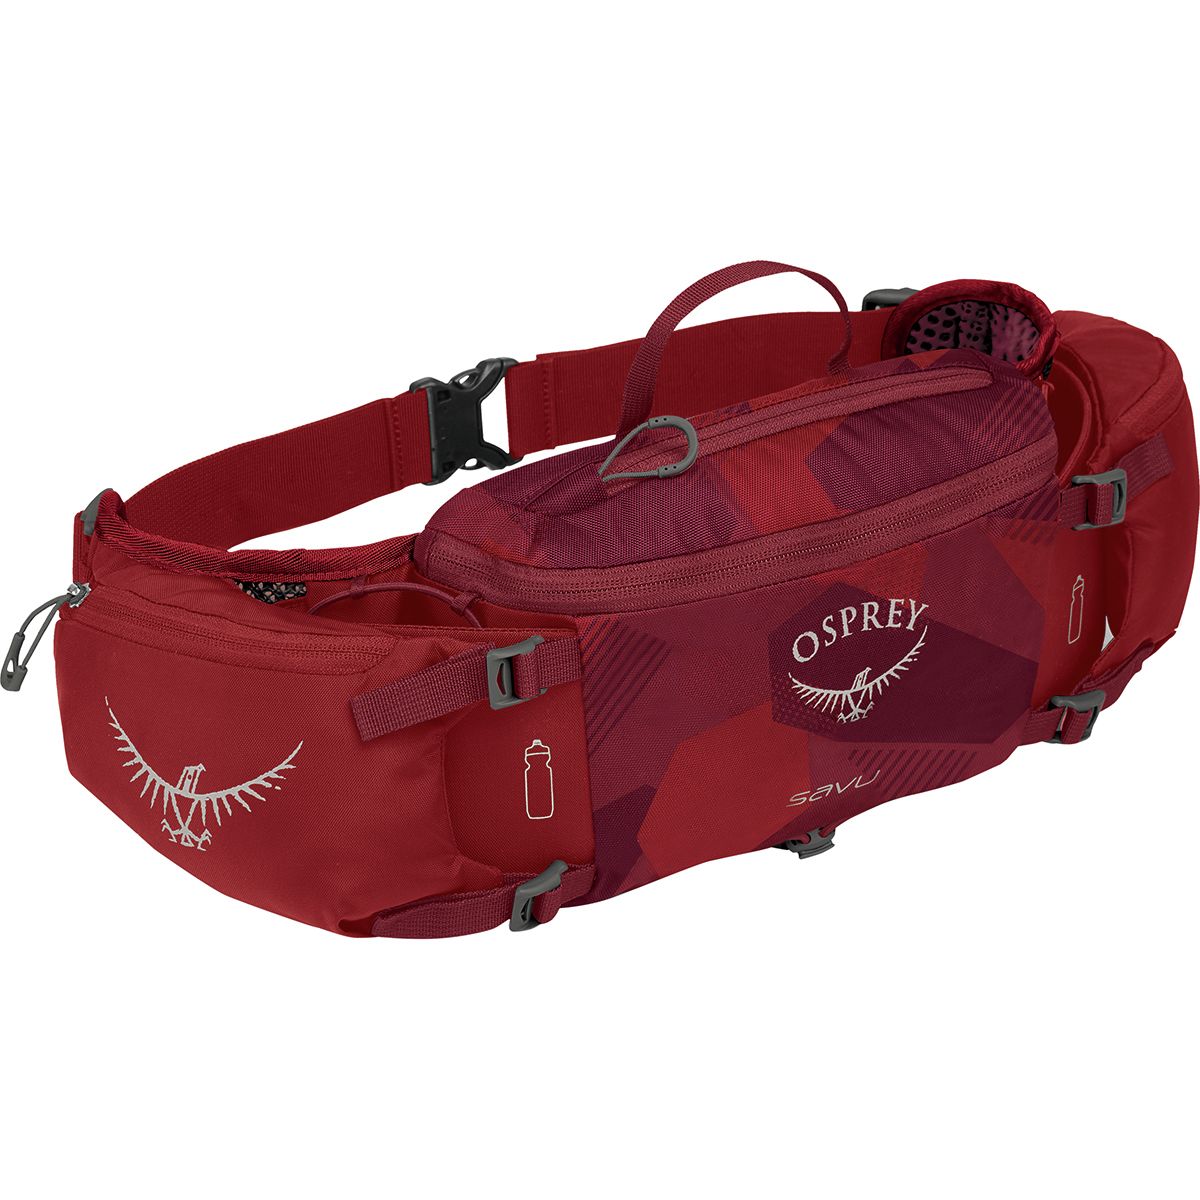 Osprey Packs Savu 4L Pack